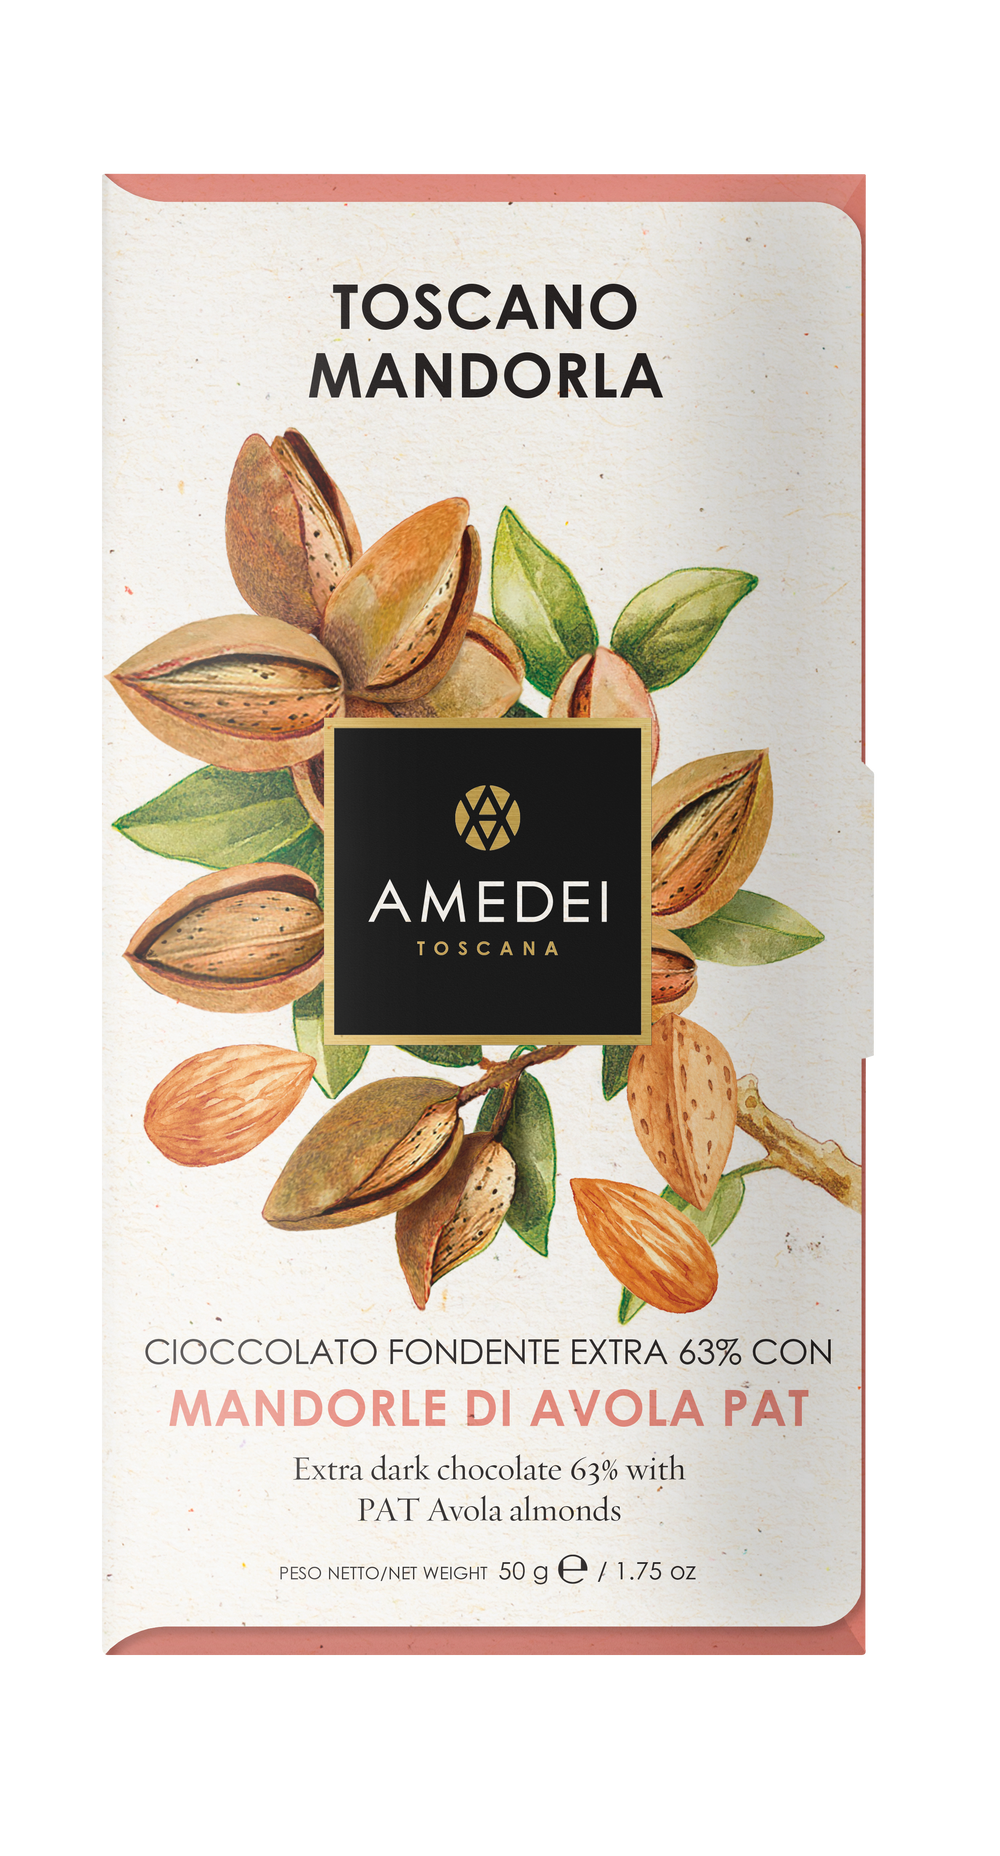 Toscano Mandorla 63% Extra Dark Chocolate with Almonds